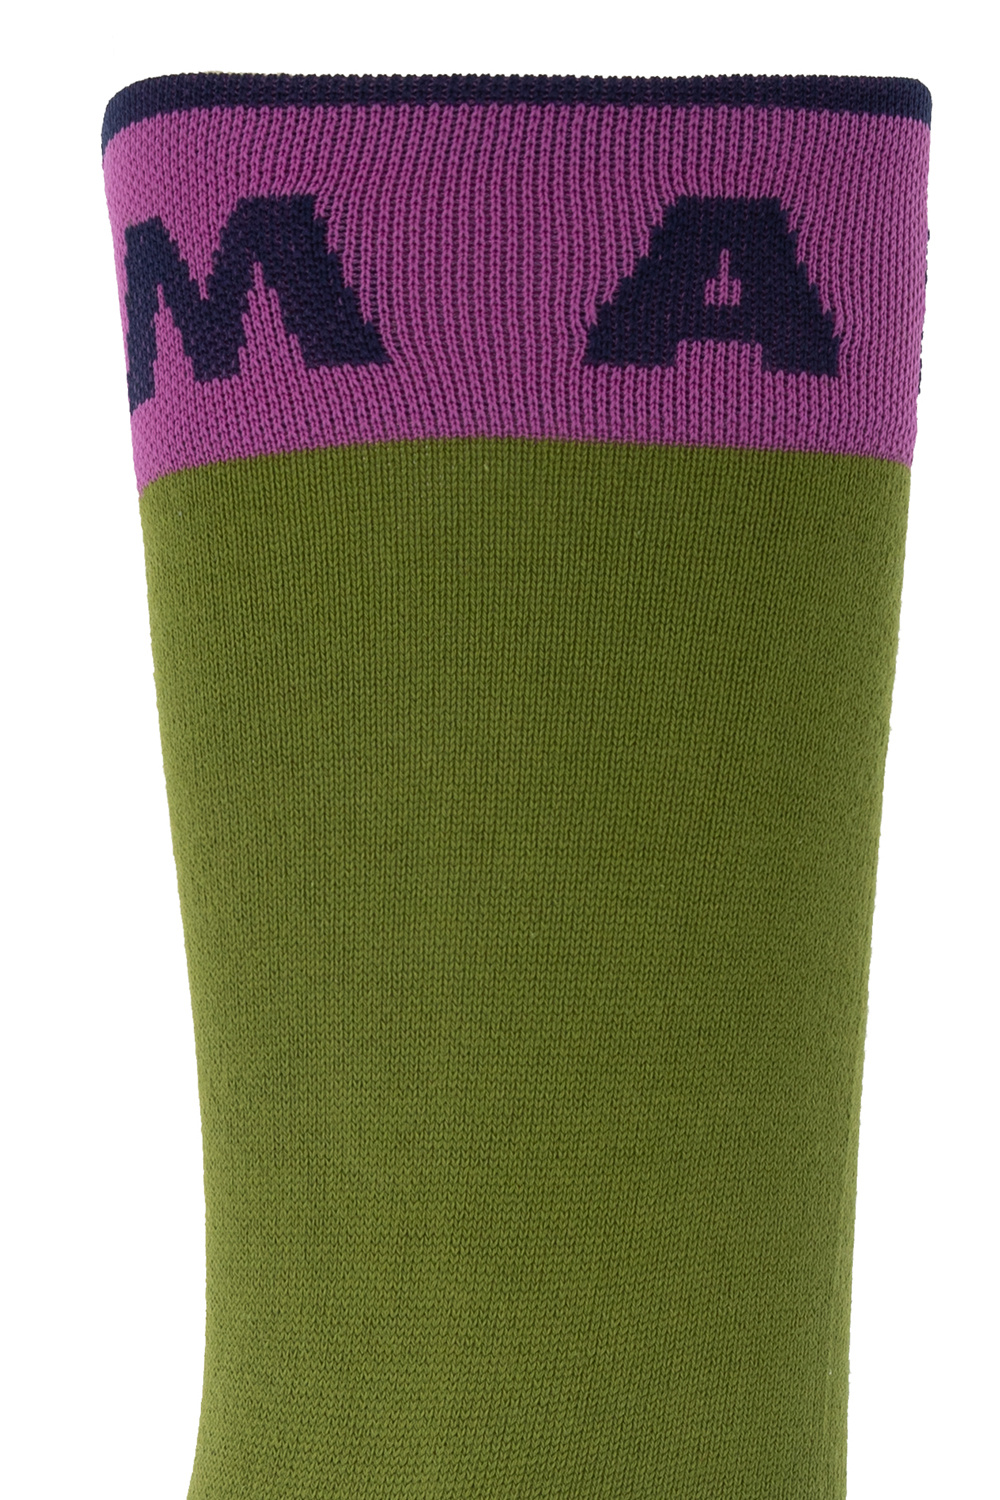 Marni Pink & Purple Jacquard Damier Socks Marni